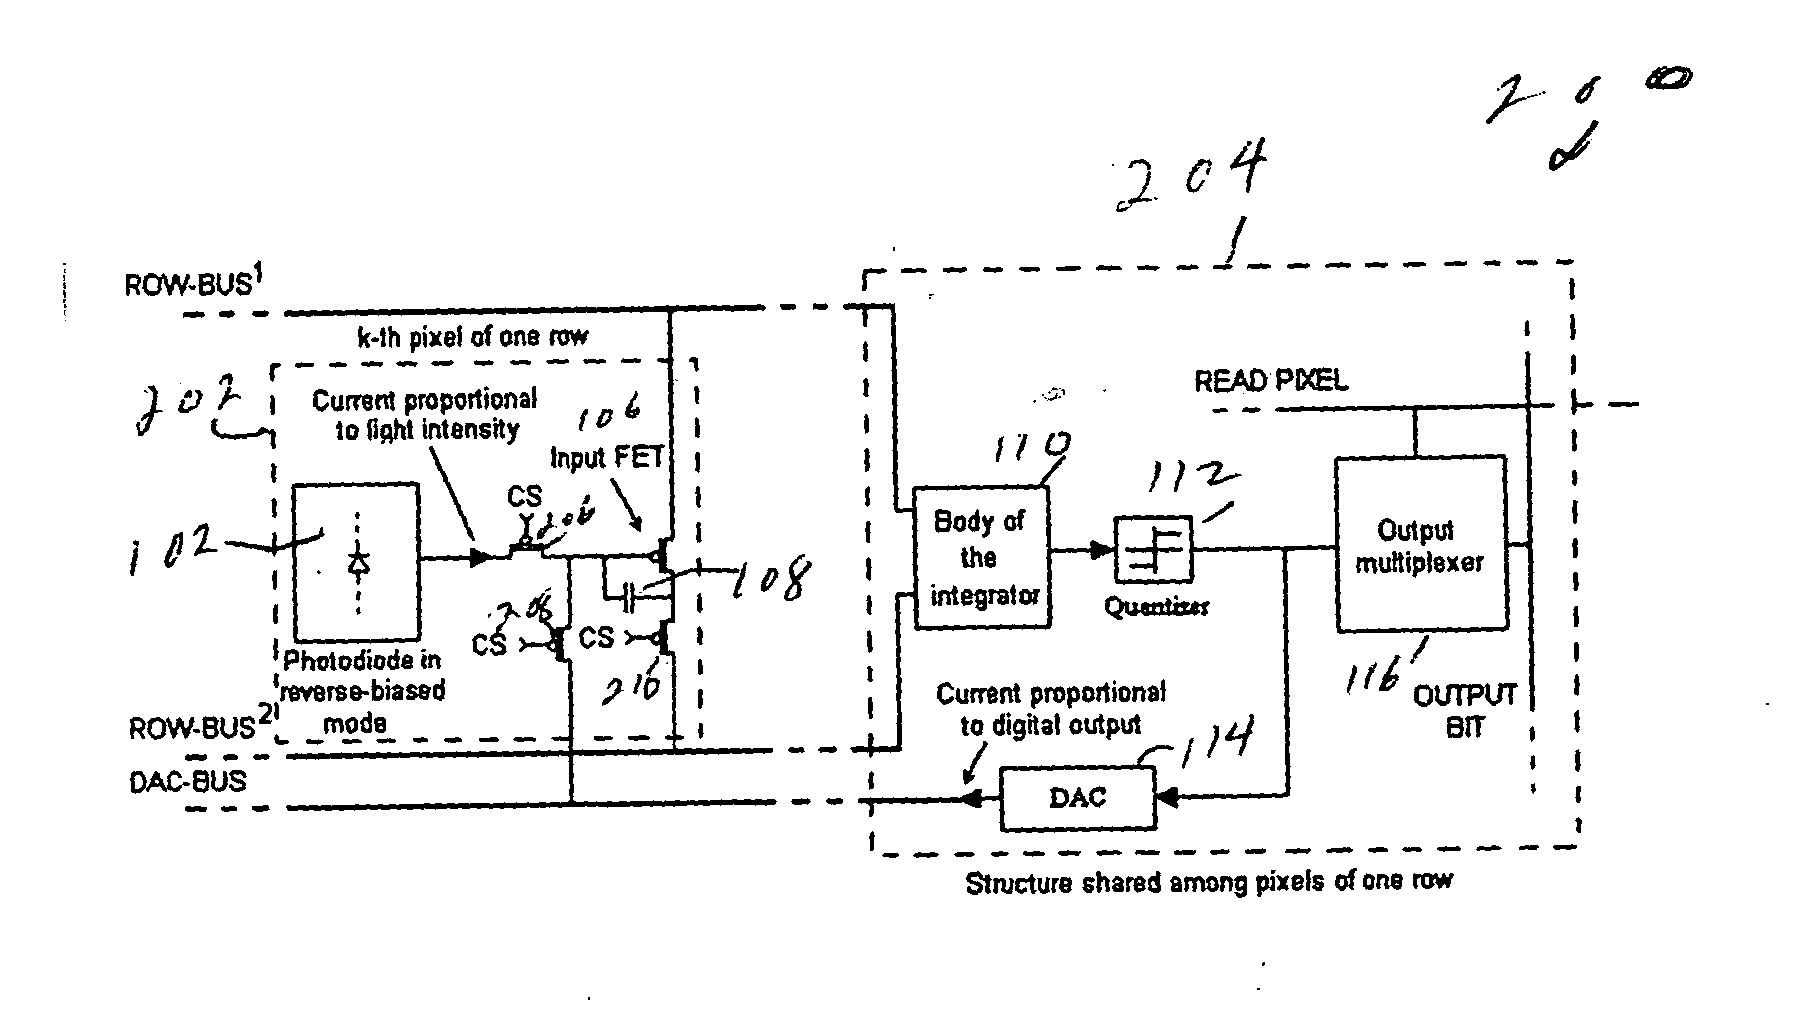 Multiplexed-input-separated sigma-delta analog-to-digital converter design for pixel-level analog-to-digital conversion